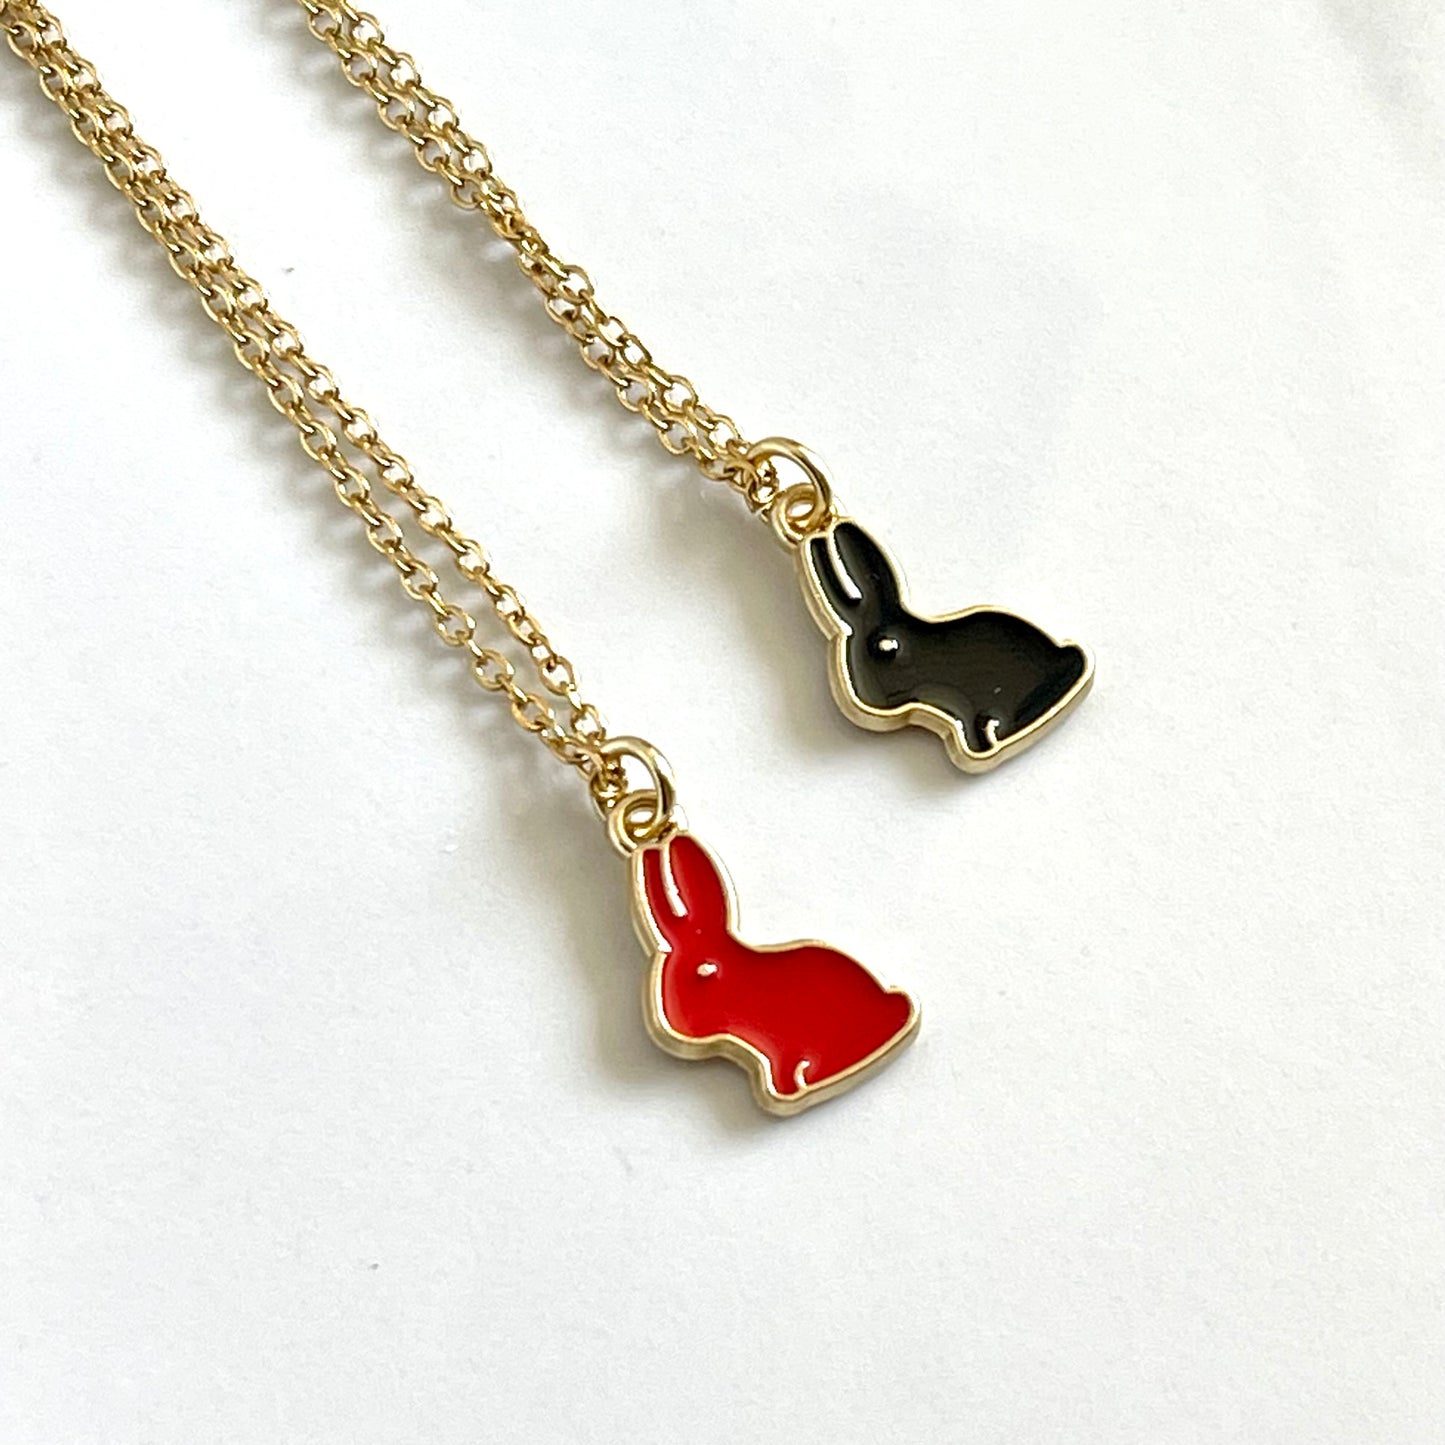 Rabbit Necklace - Red & Black Enamel Gold Necklace